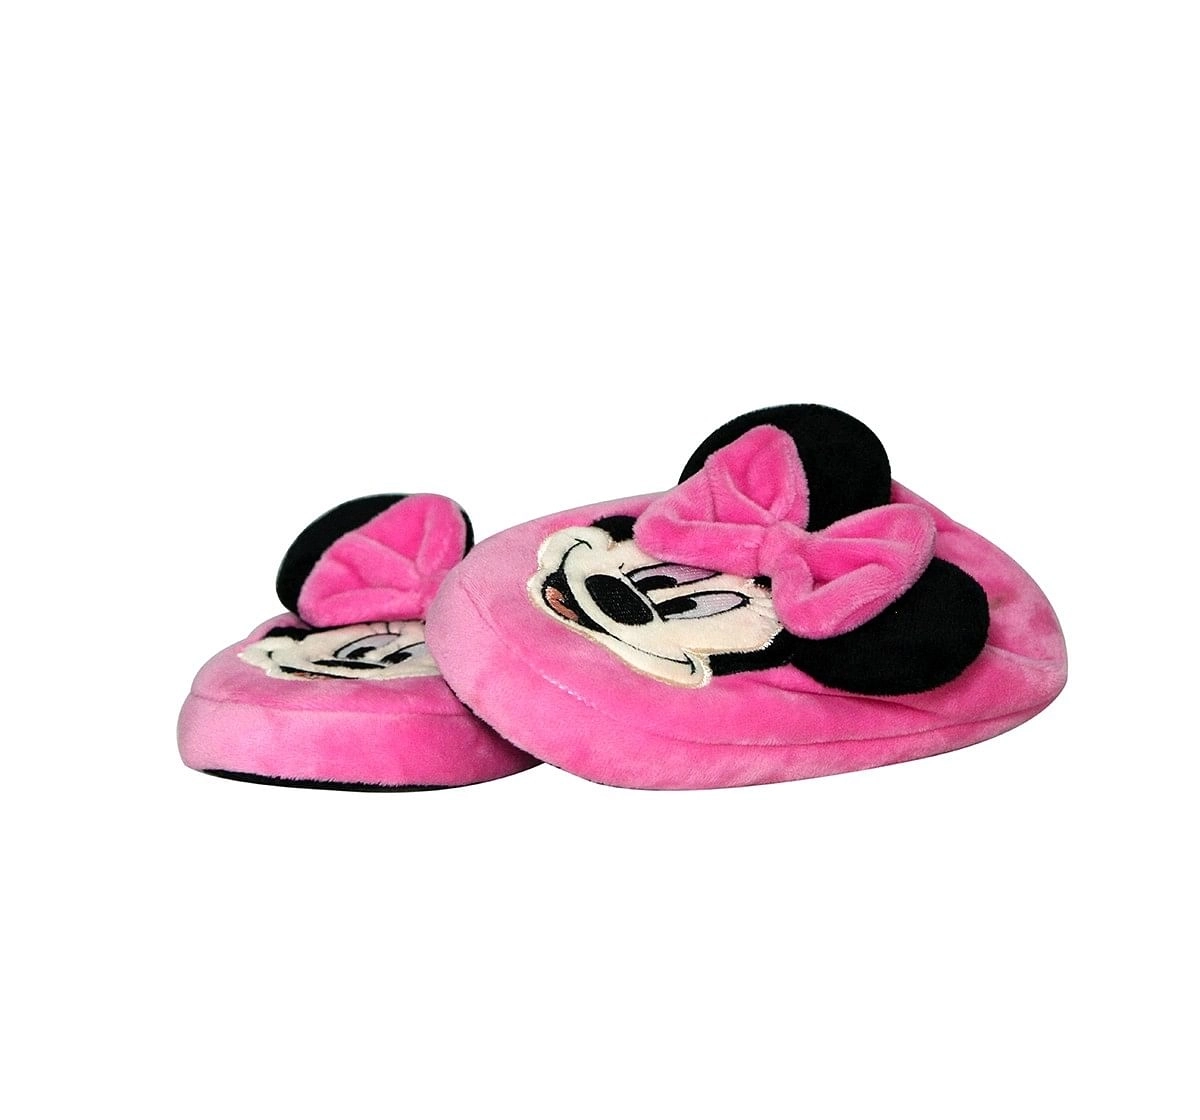 Funko Disney Minnie Flipflop Plush Accessories for Kids age 12M+ - 5 Cm 